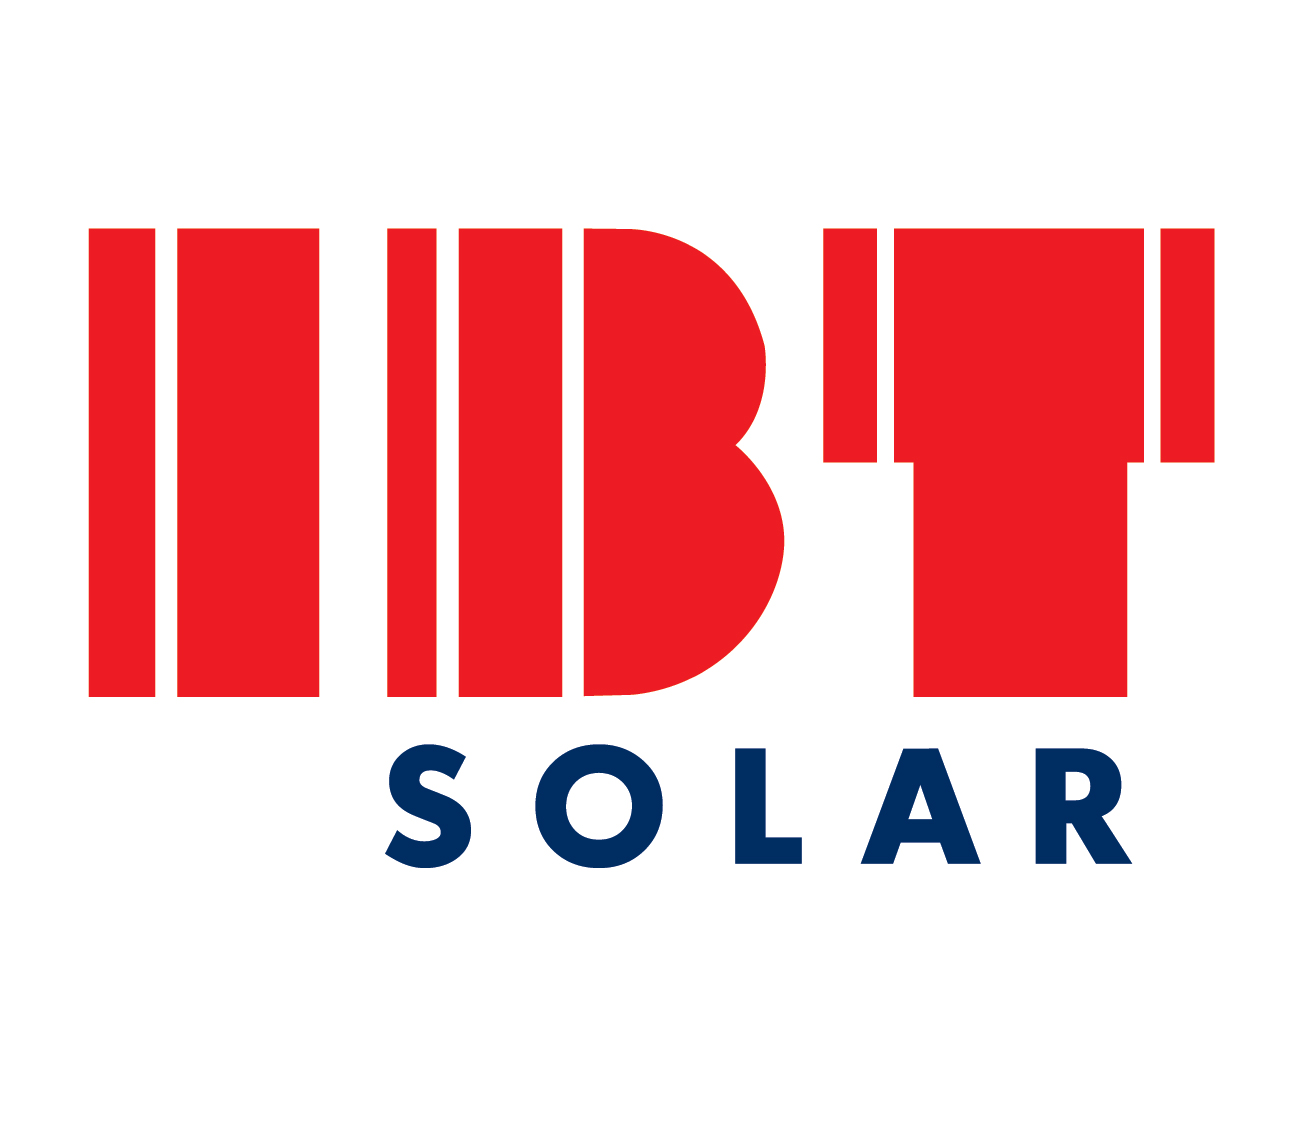 ibt solar logo